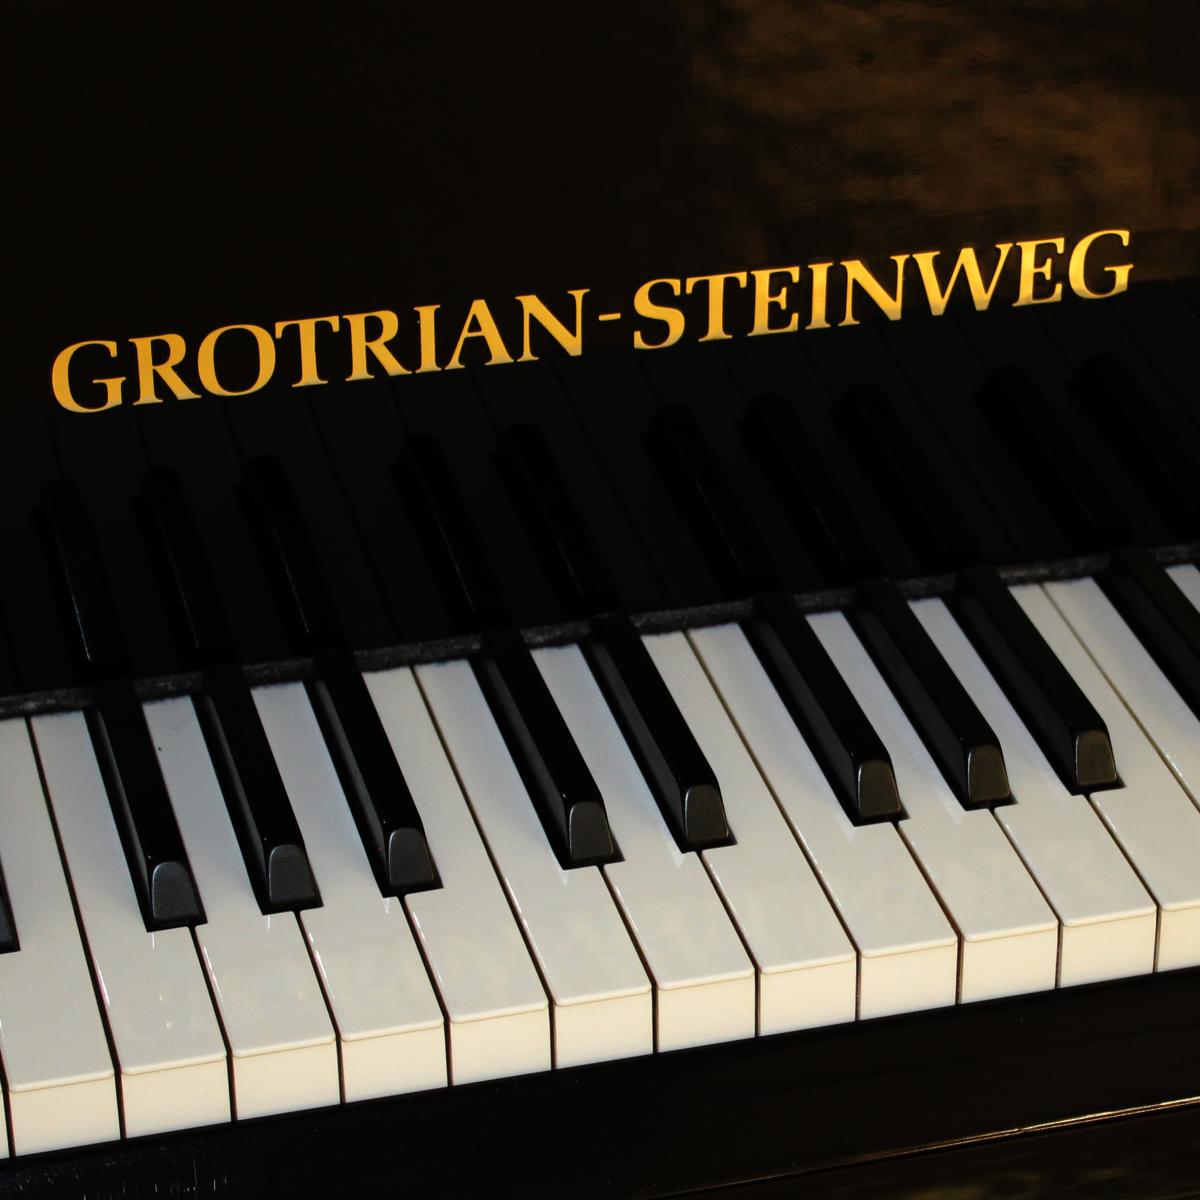 Grotrian-Steinweg nameboard